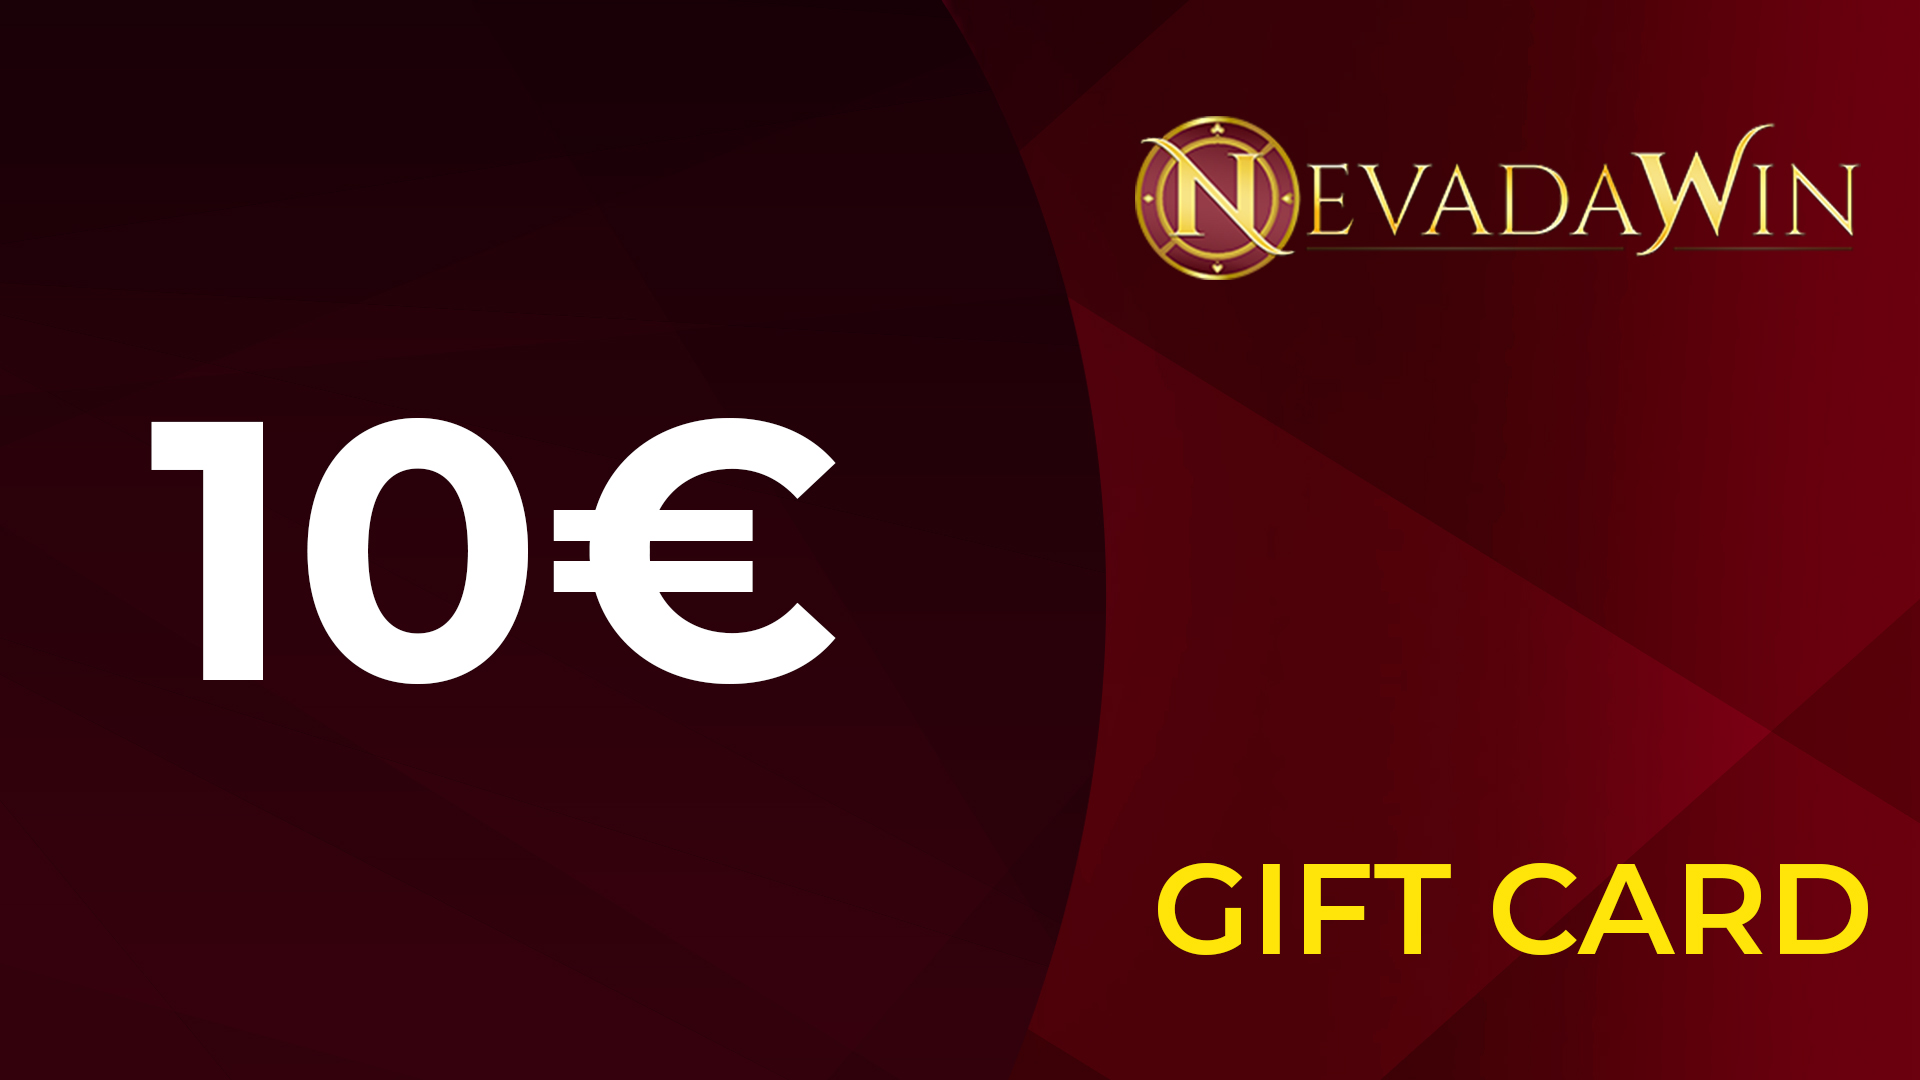 NevadaWin €10 Giftcard $10.99